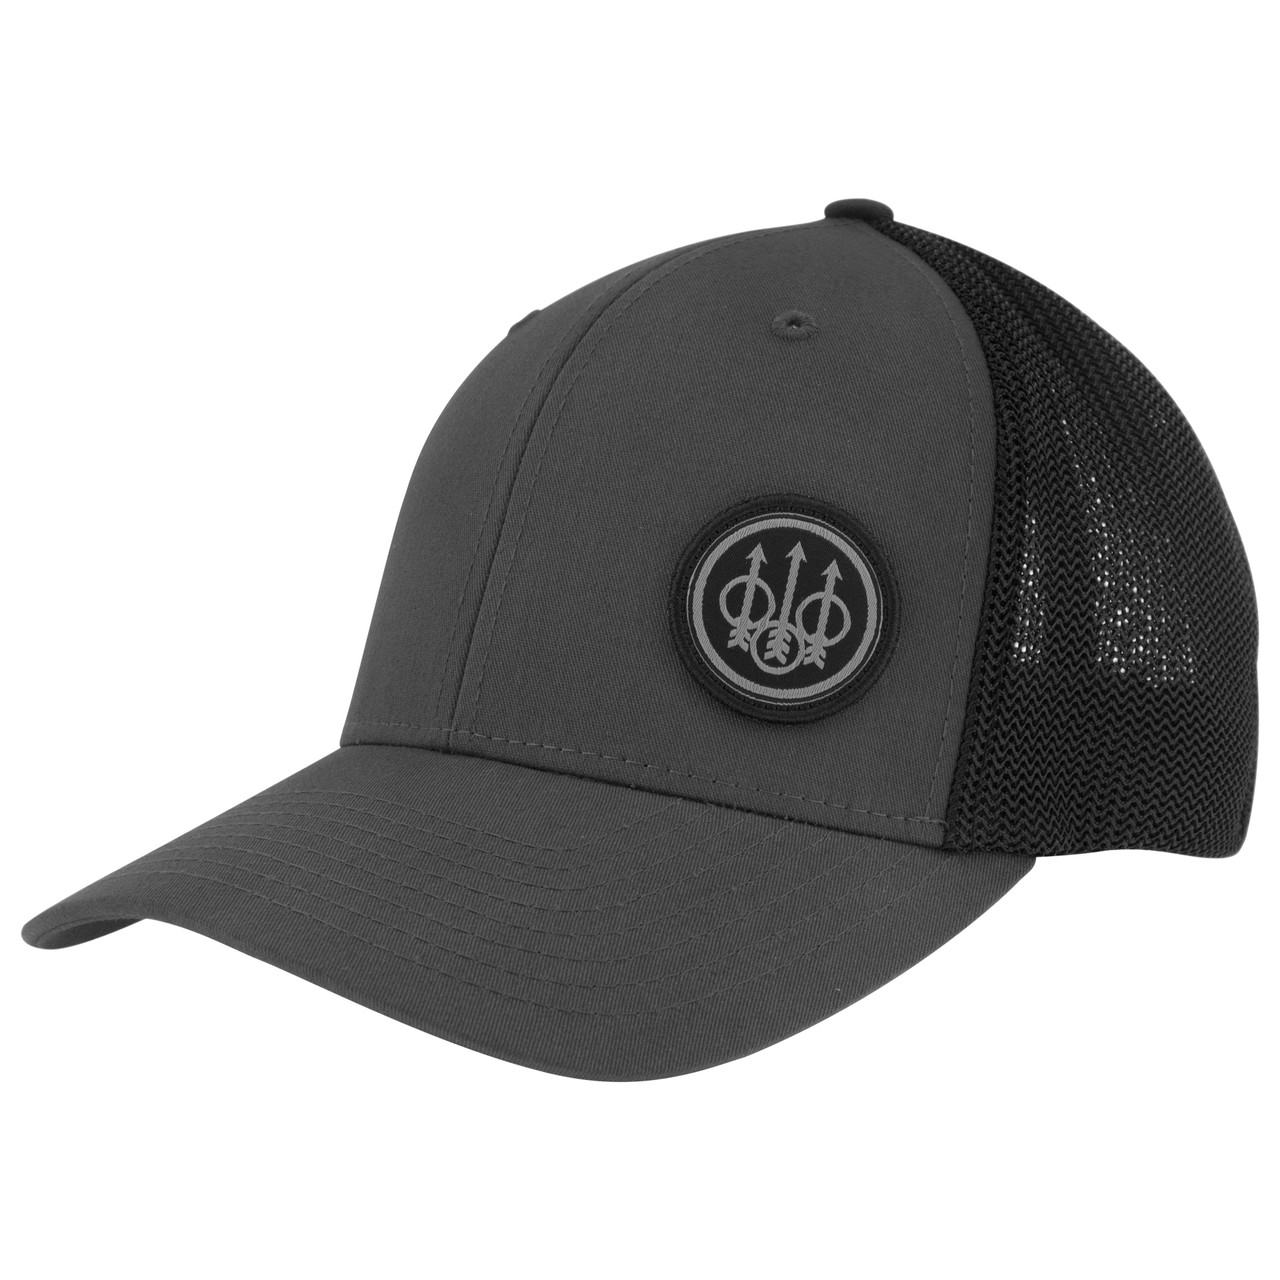 Beretta TK Flexfit Trucker Hat- Black/Gray- Front